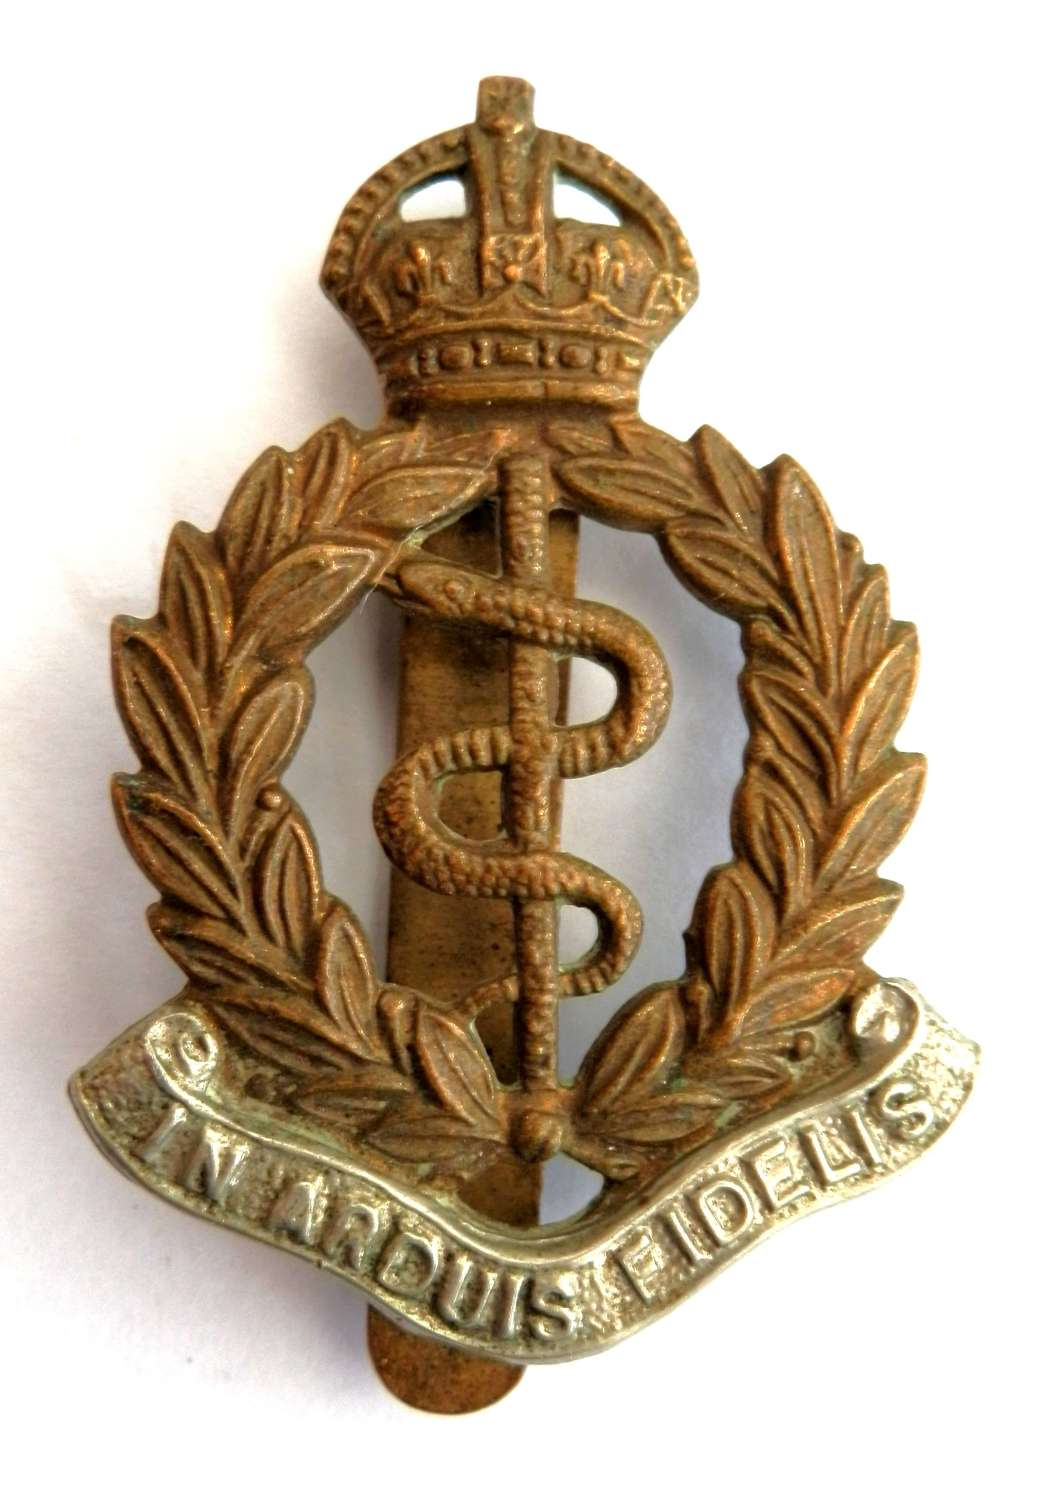 The Royal Army Medical Corps Cap Badge